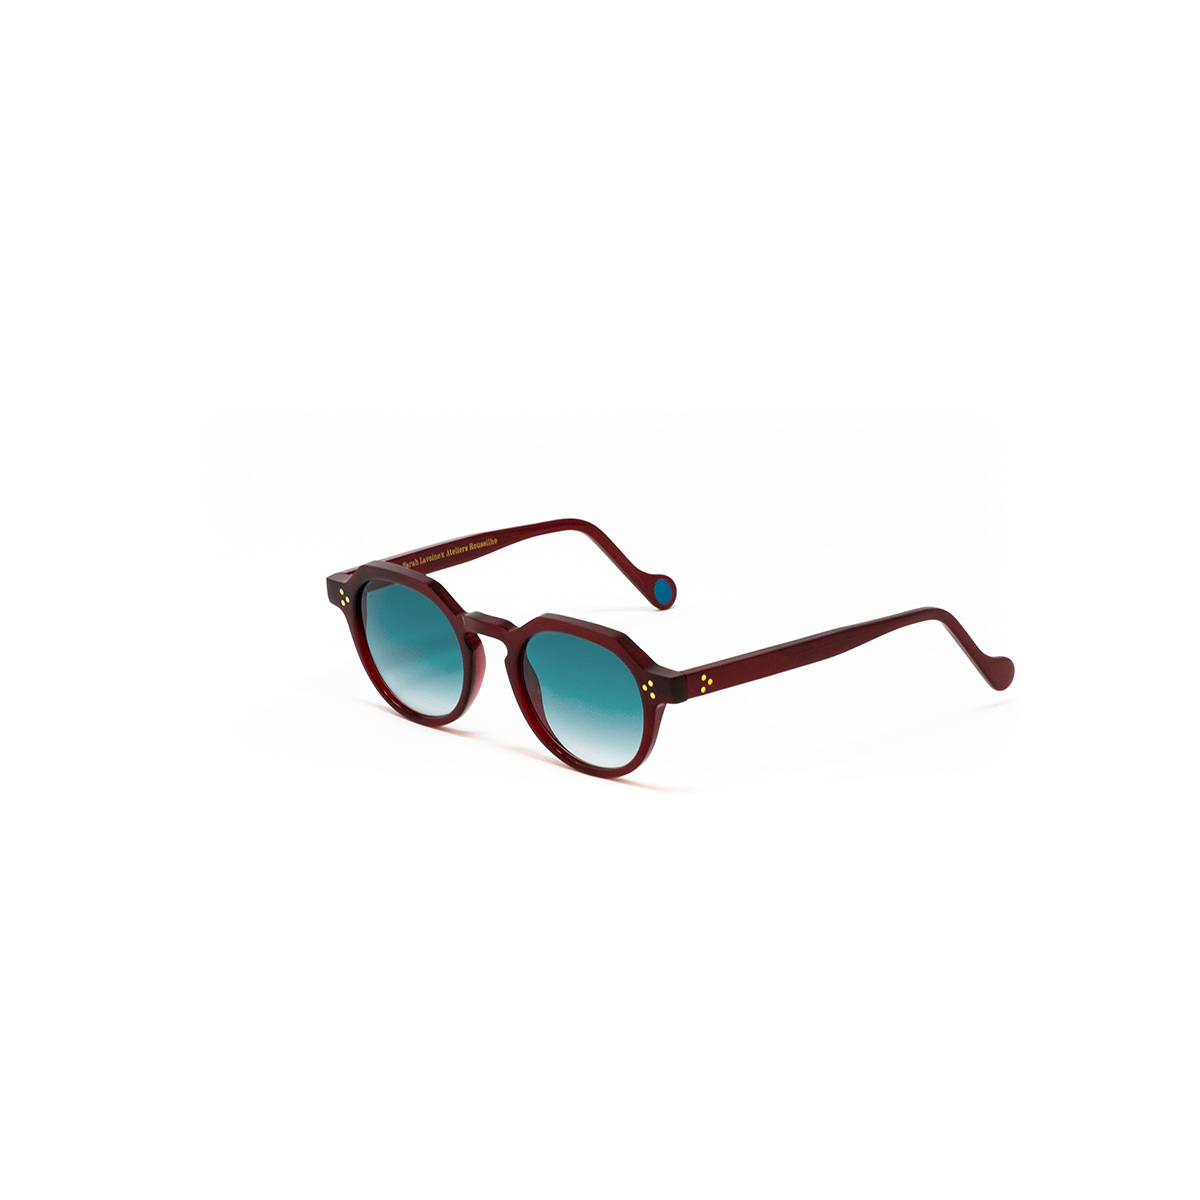 Sunglasses Eddy, Bordeaux - Size 48-20 - Organic acetate - image 2